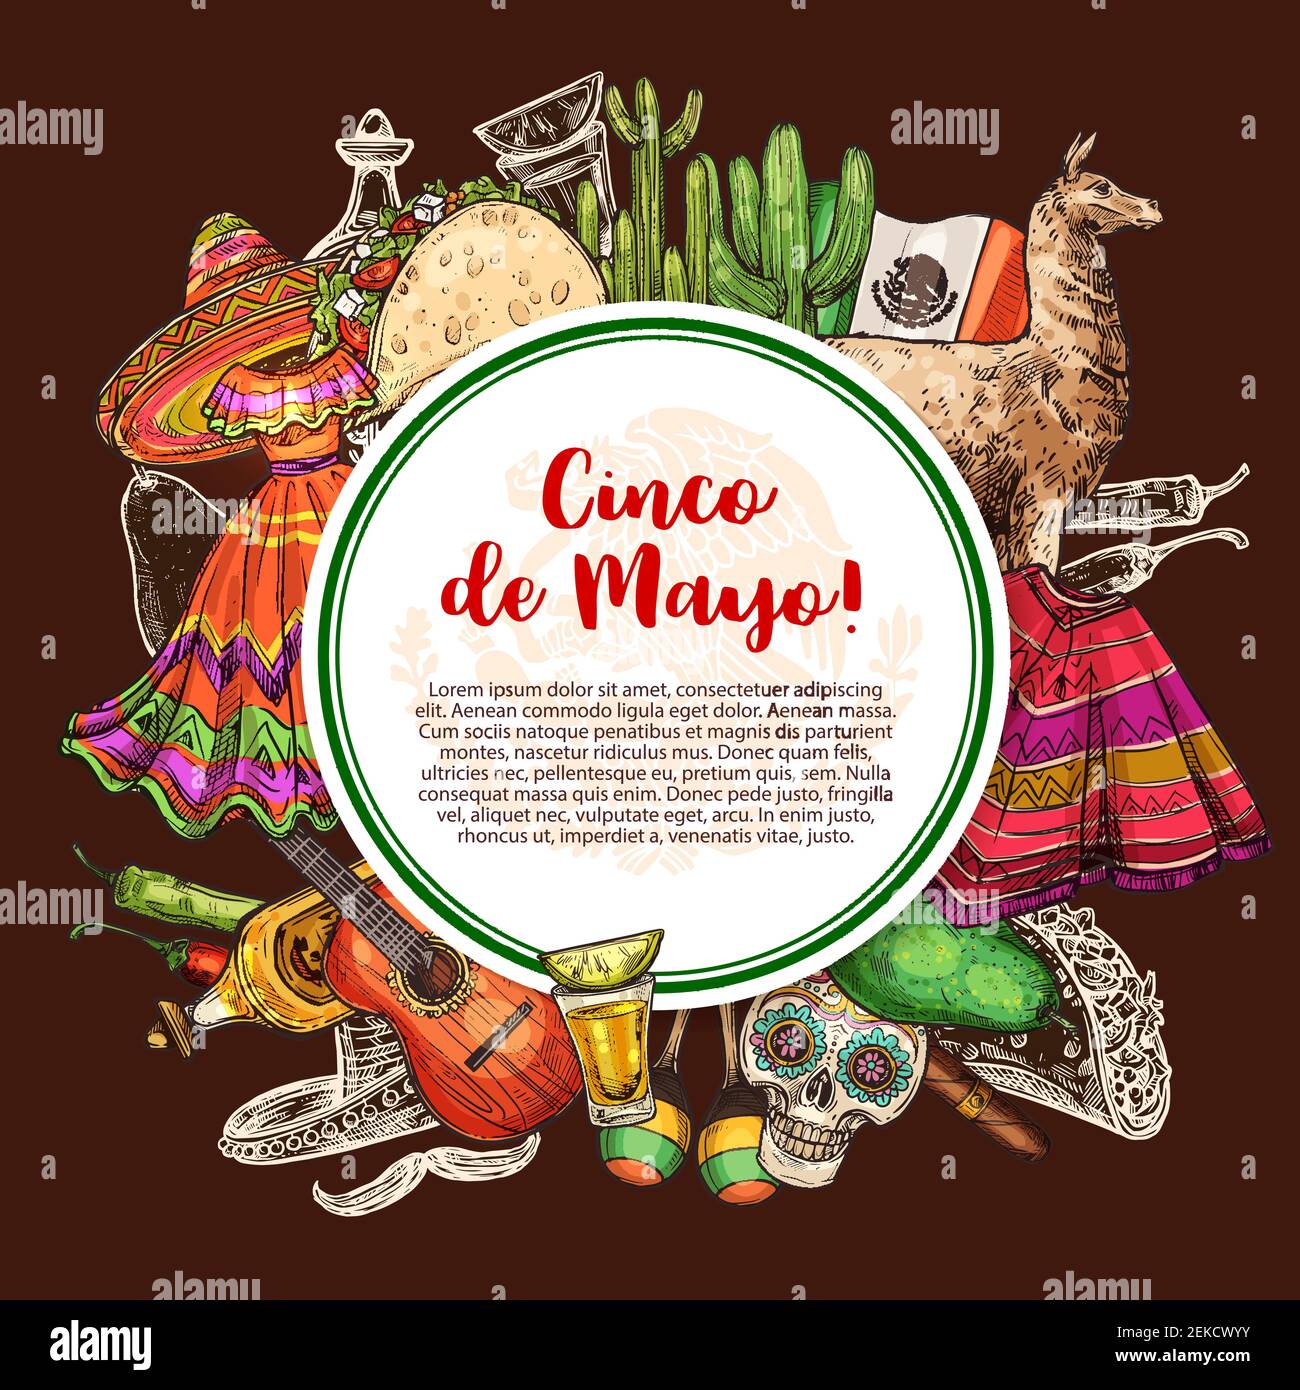 Chinco de Mayo Stock Vector Image & Art - Alamy